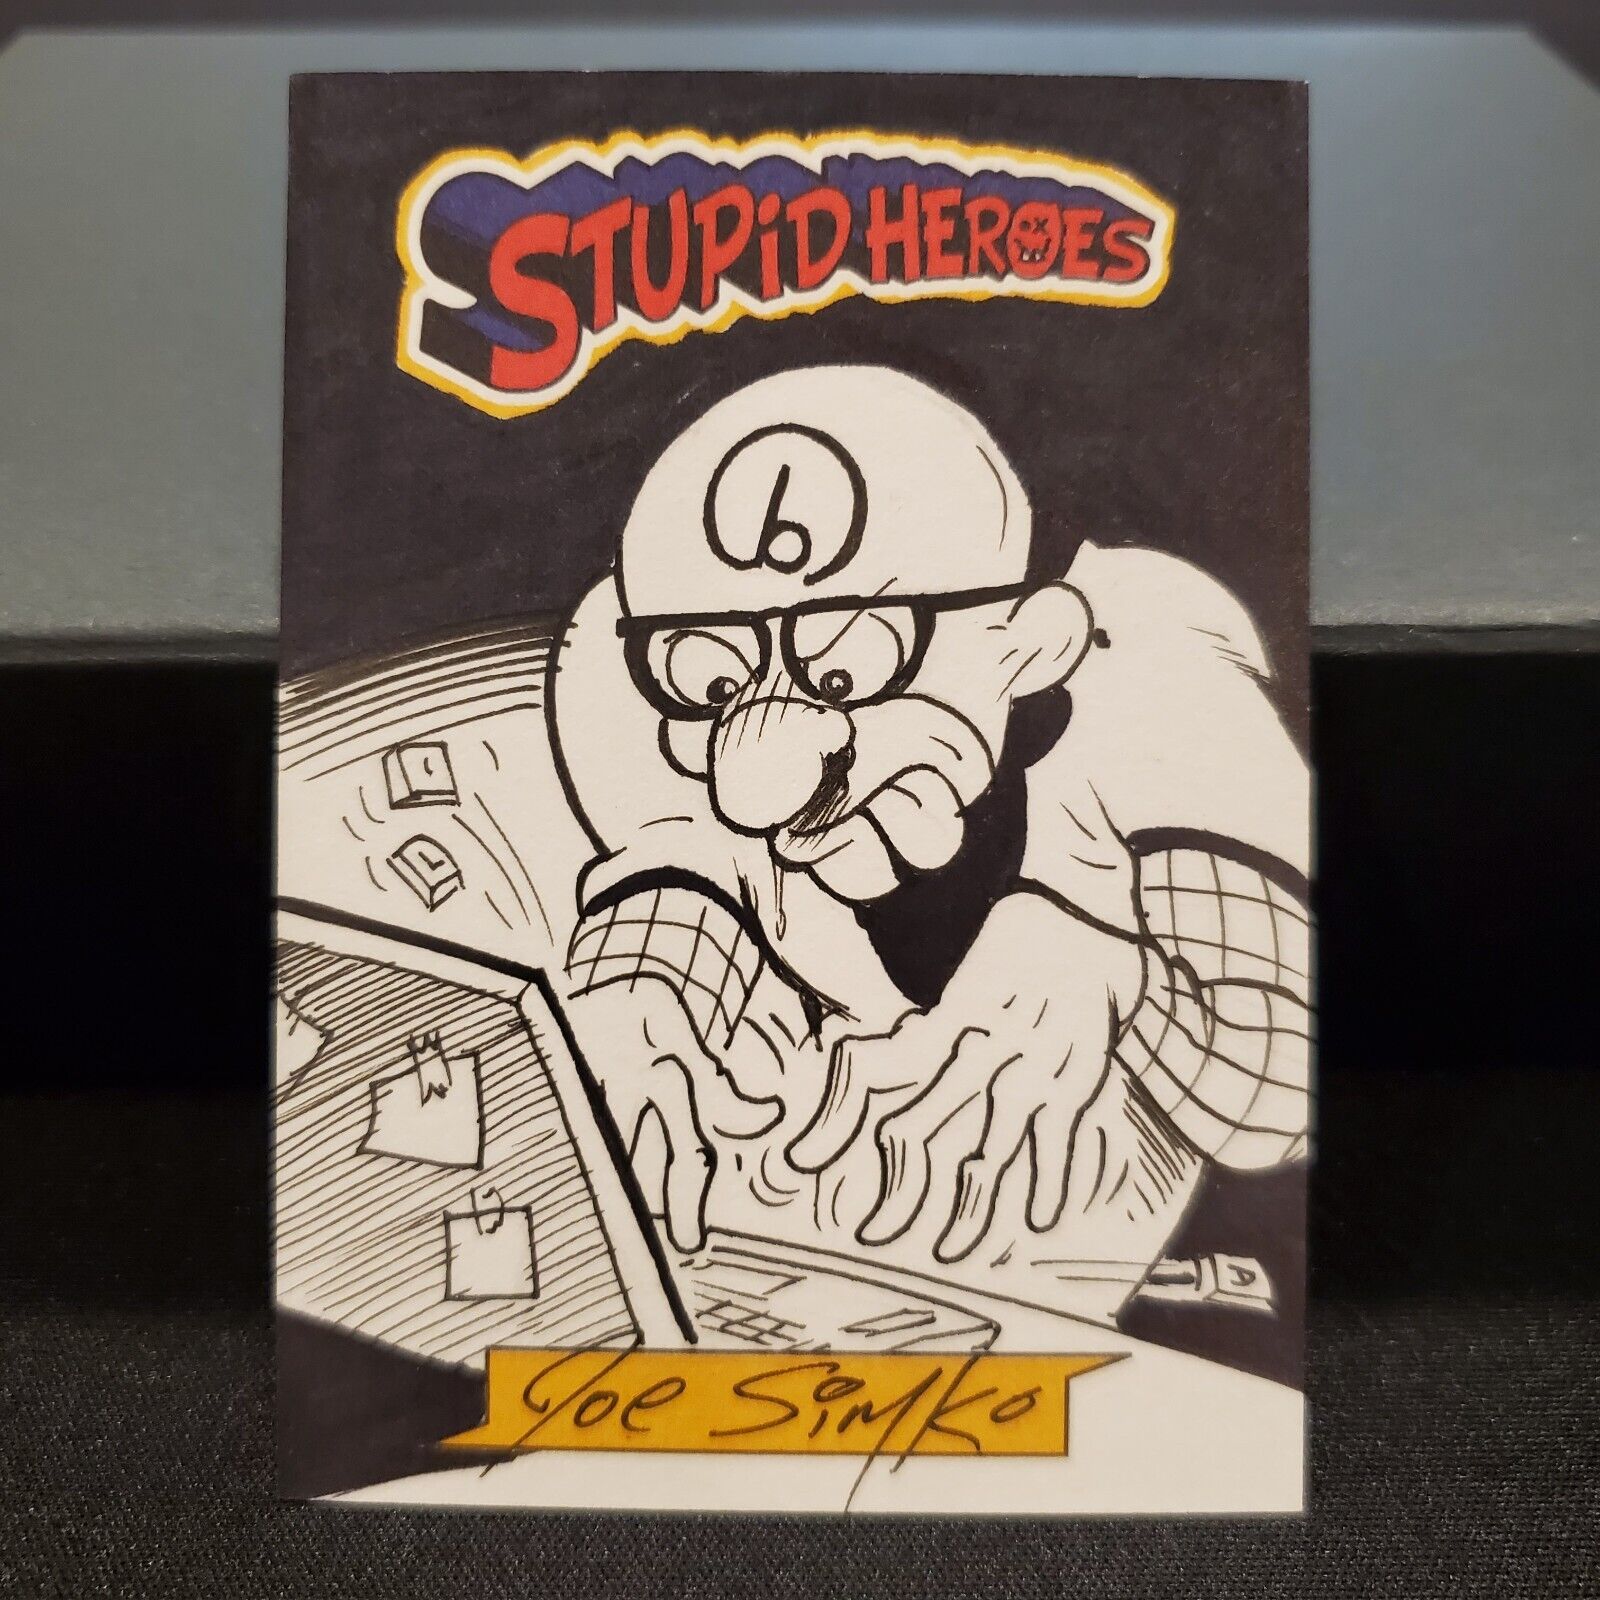 JOE SIMKO Sketch Card - 2014 Stupid Heroes - Comes with free base card (see pic)